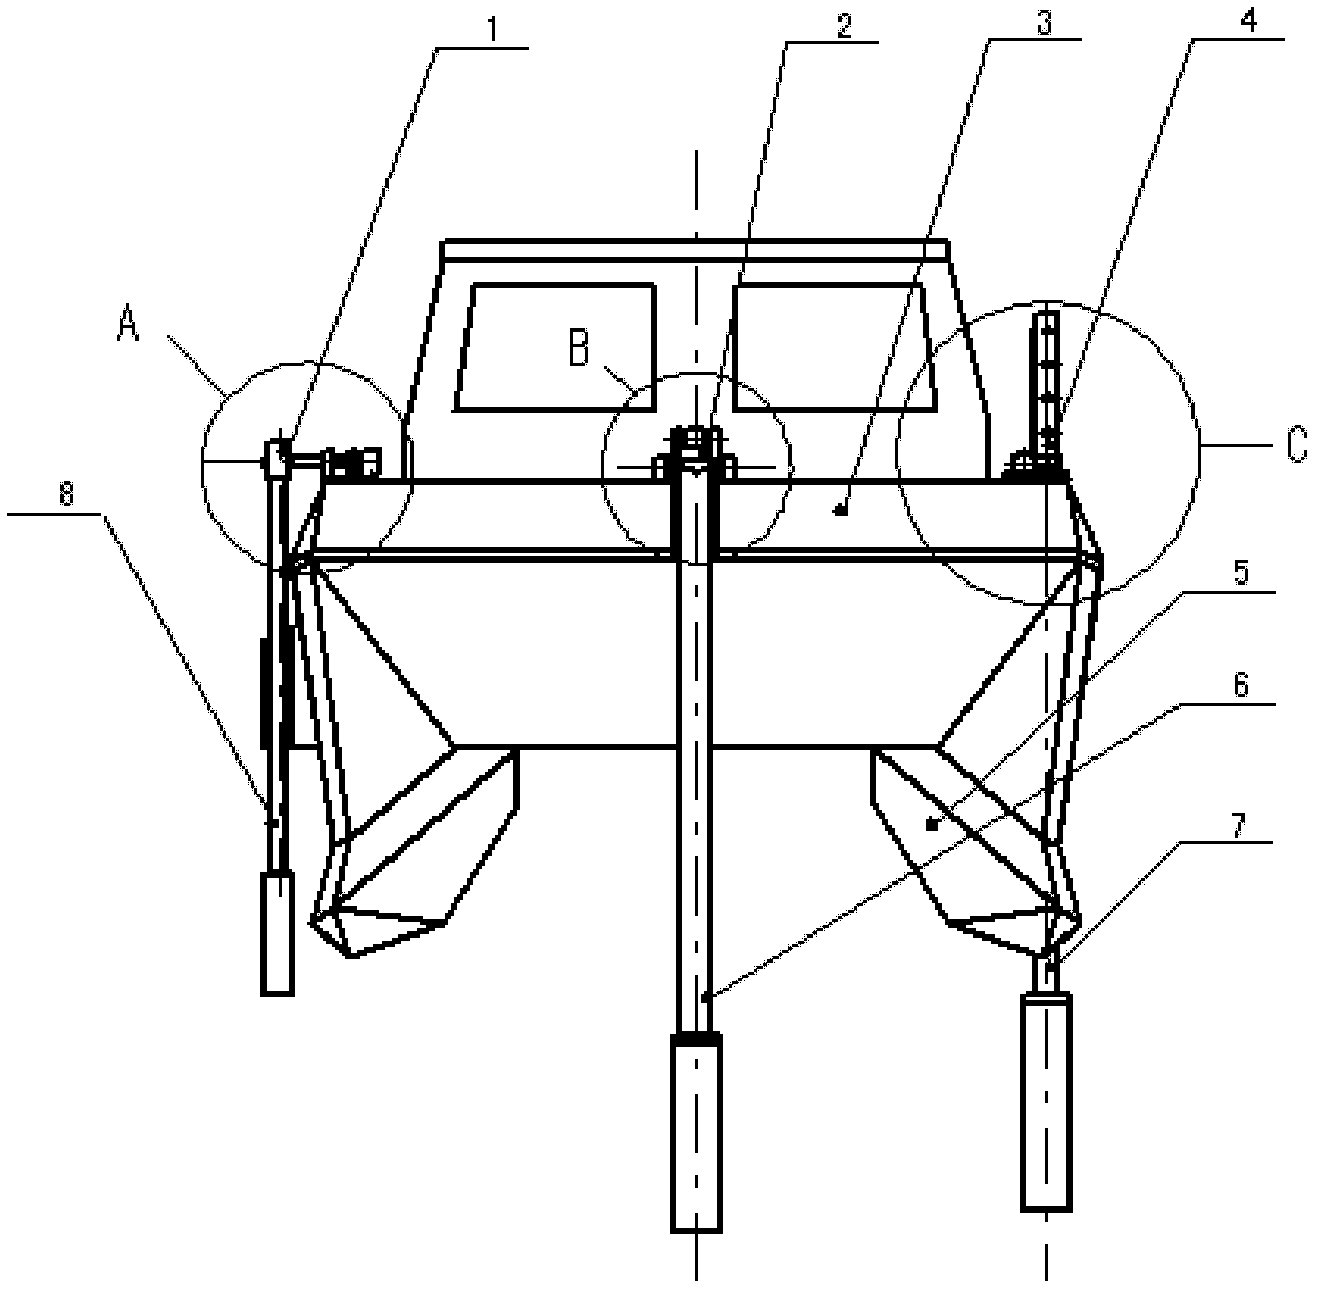 Double-body mechanical marine survey boat